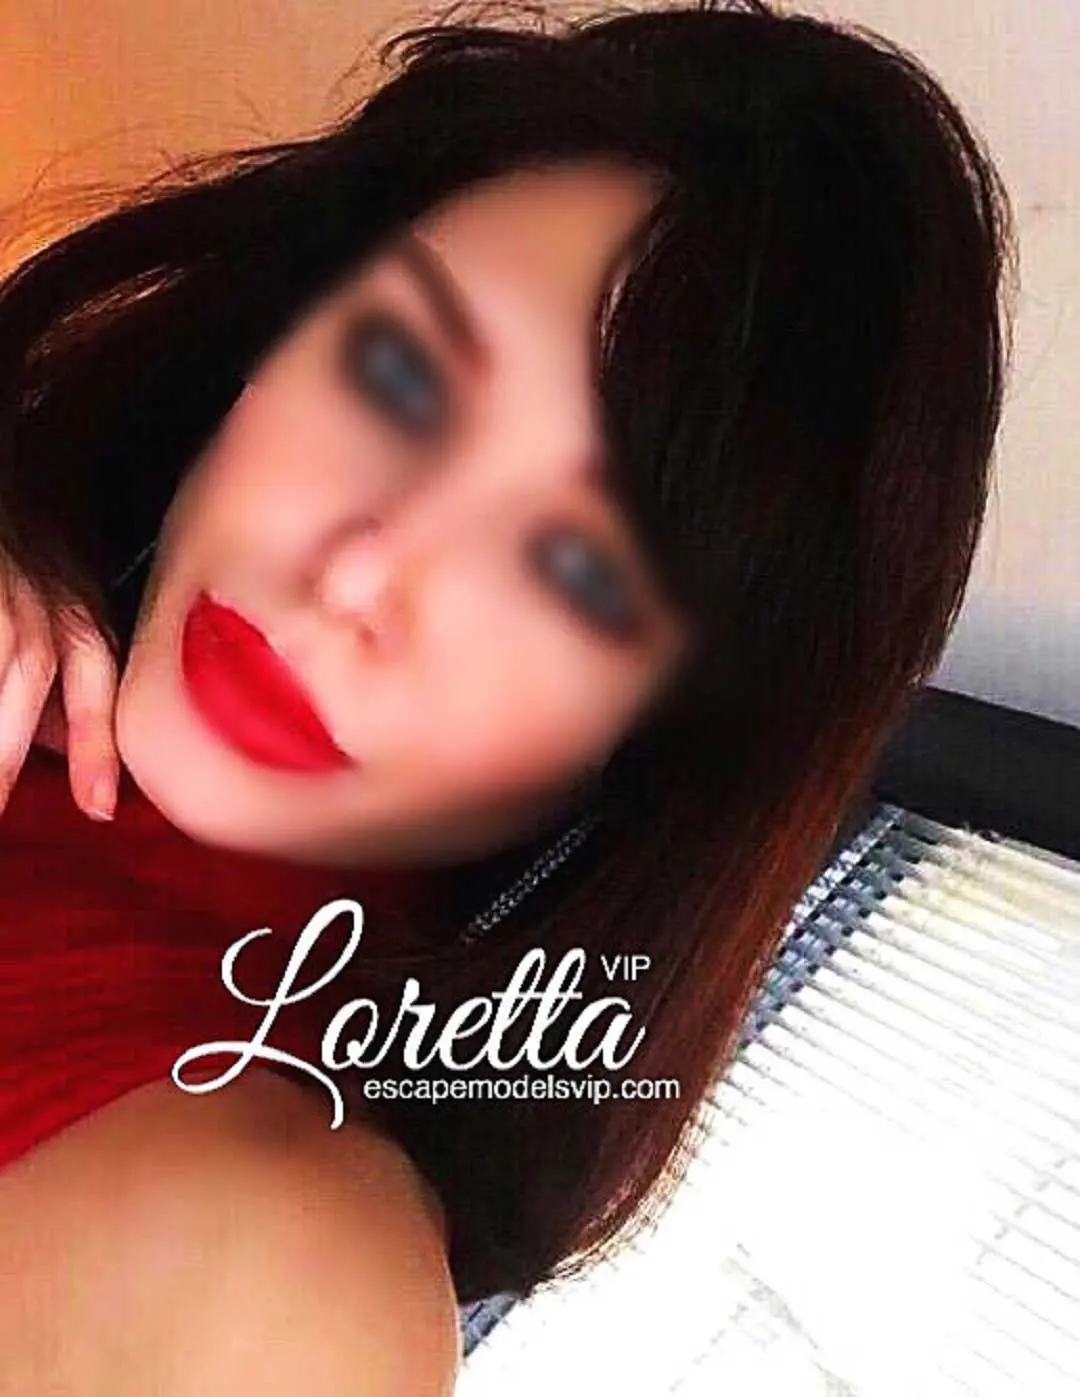 New Super Model Loretta